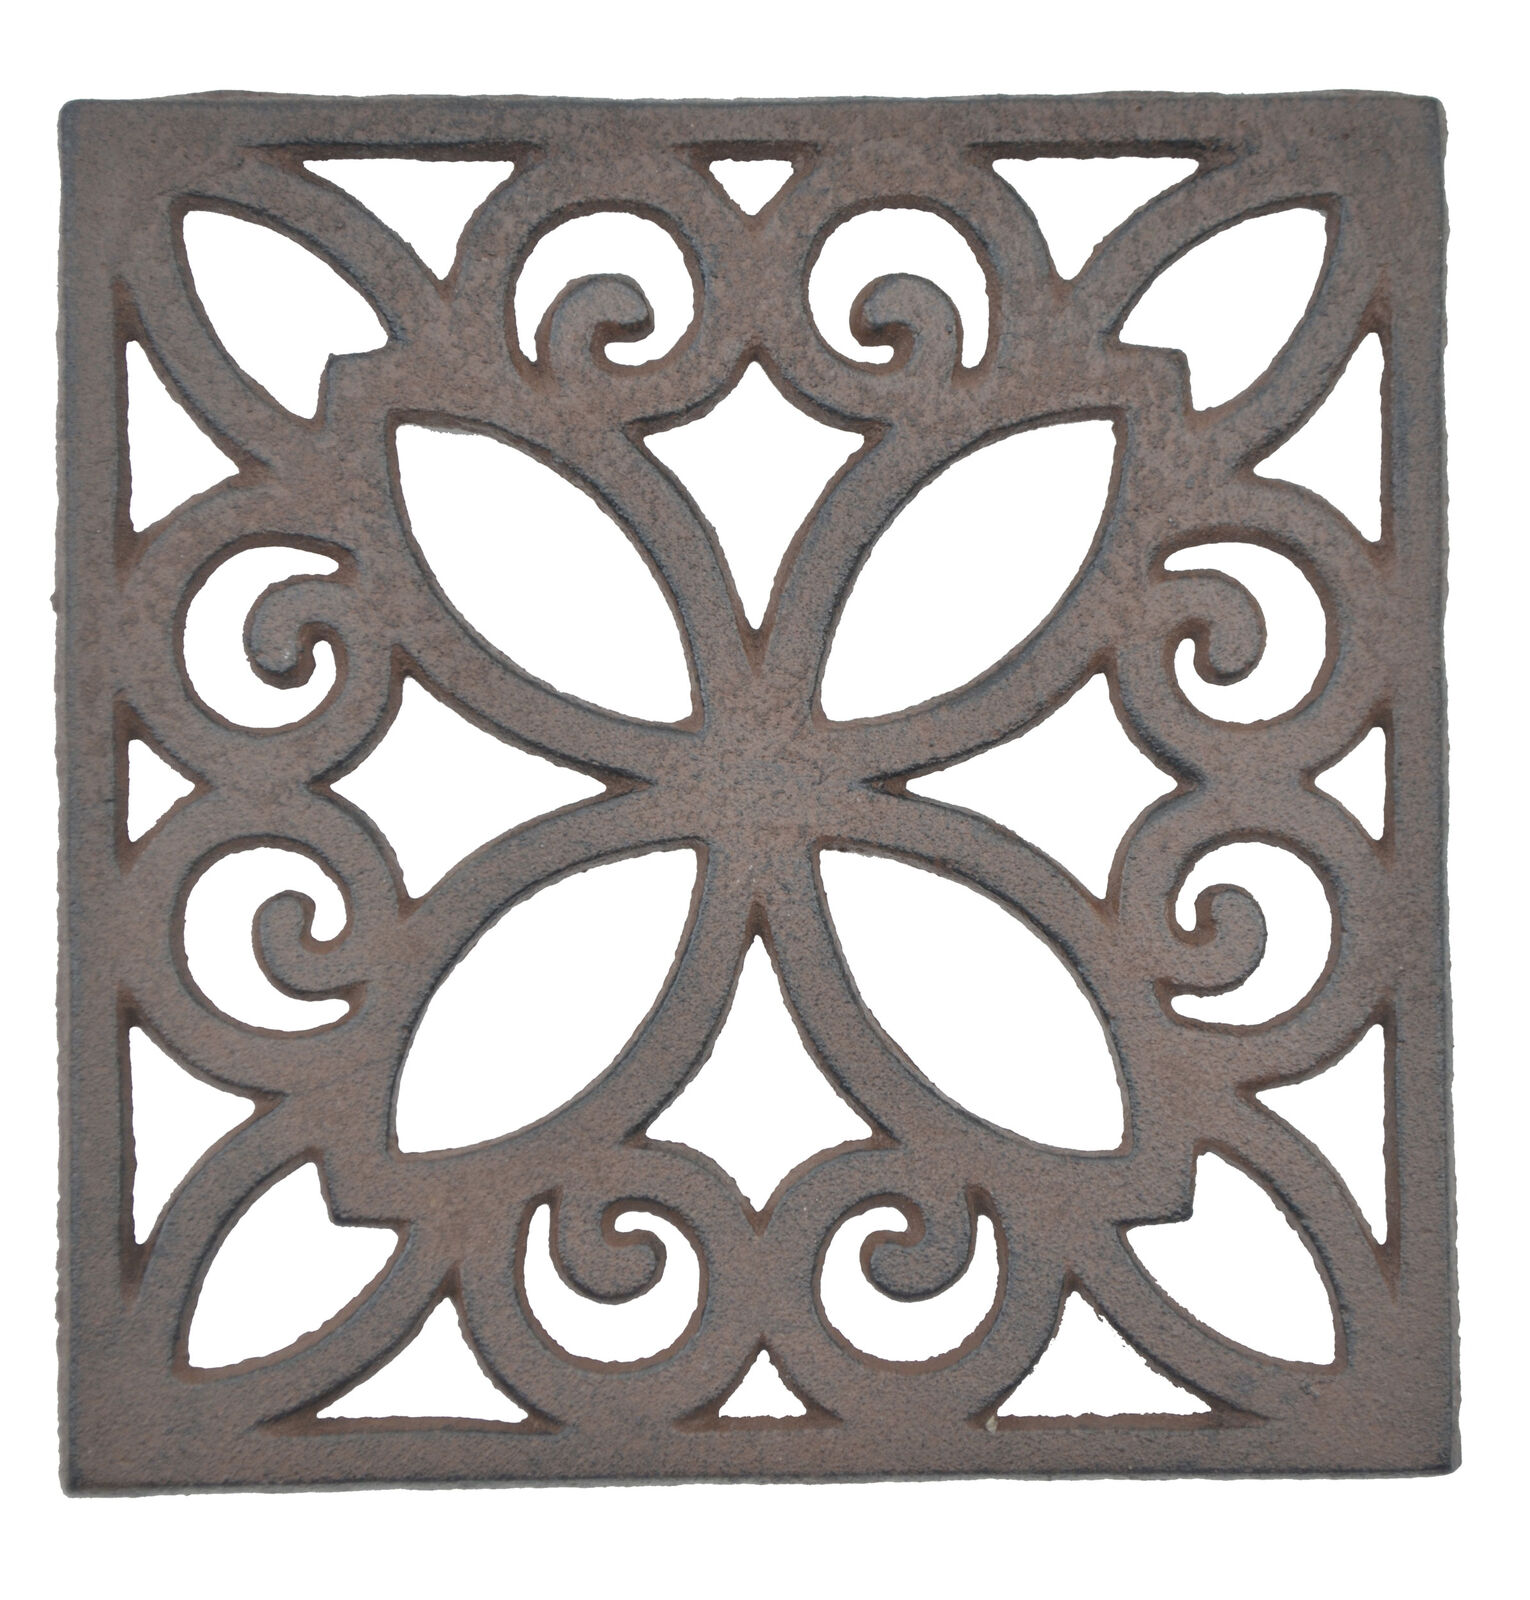 Decorative Trivet Square Cast Iron Hot Pad Kitchen Decor